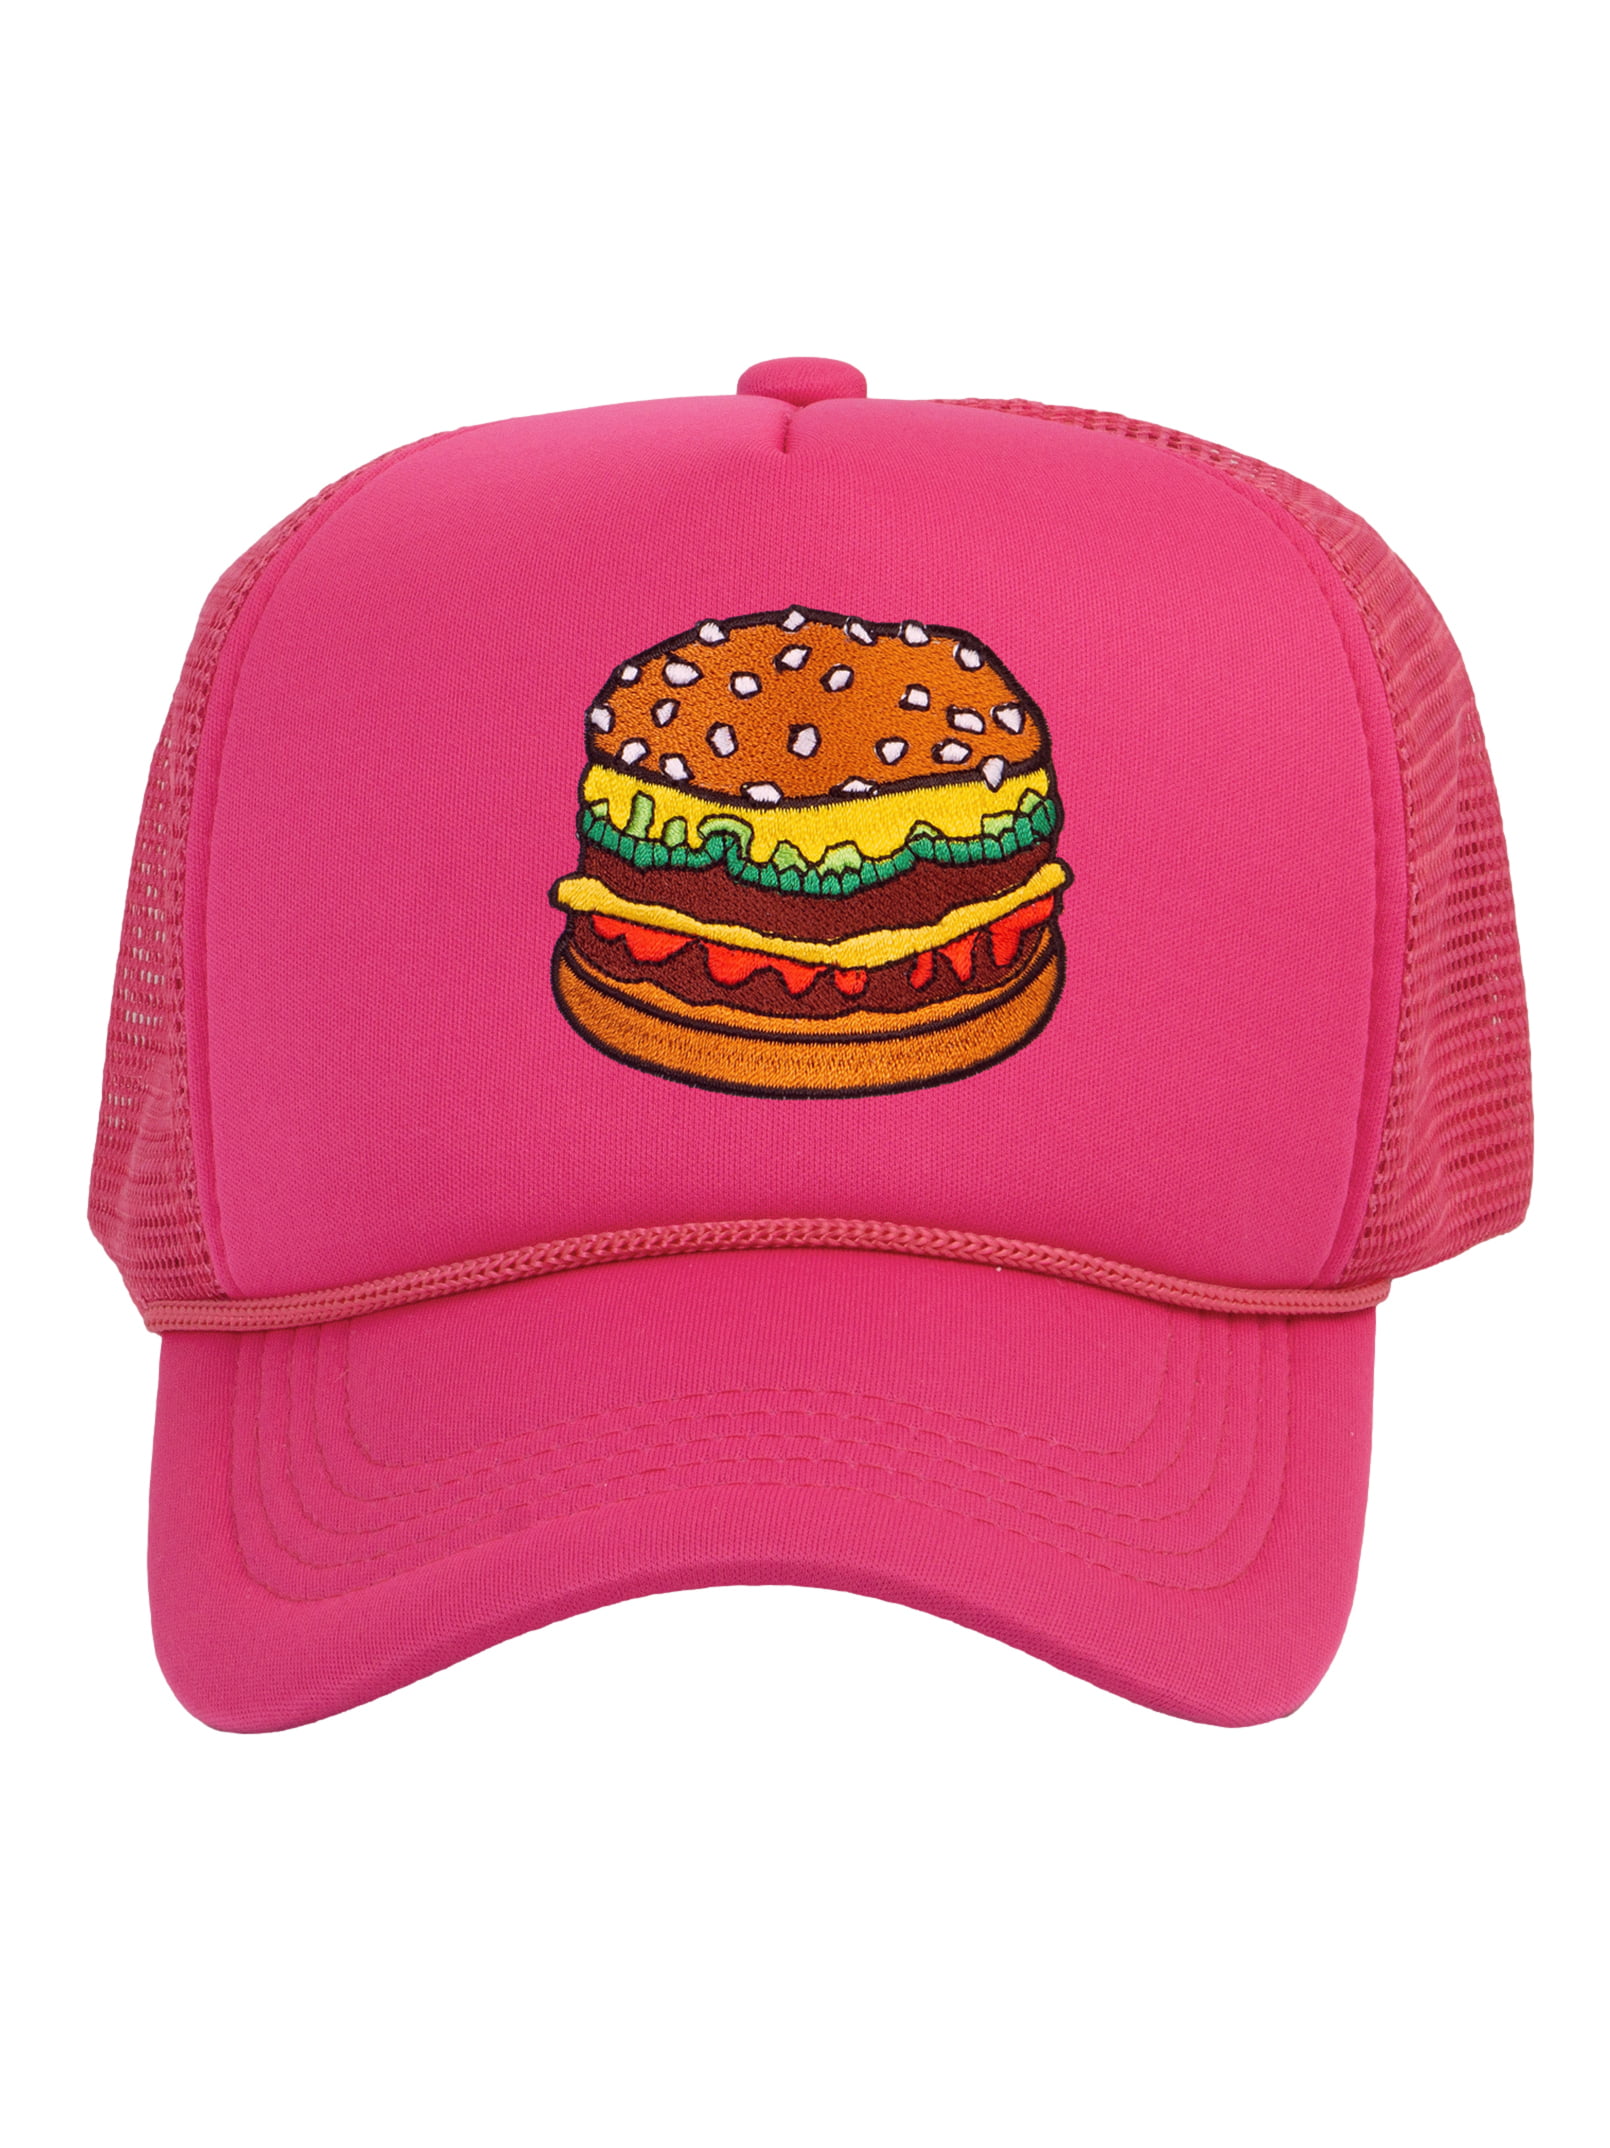 Top Headwear Hamburger Cheeseburger Trucker Hat - Men's Snapback Burger  Food Cap Red